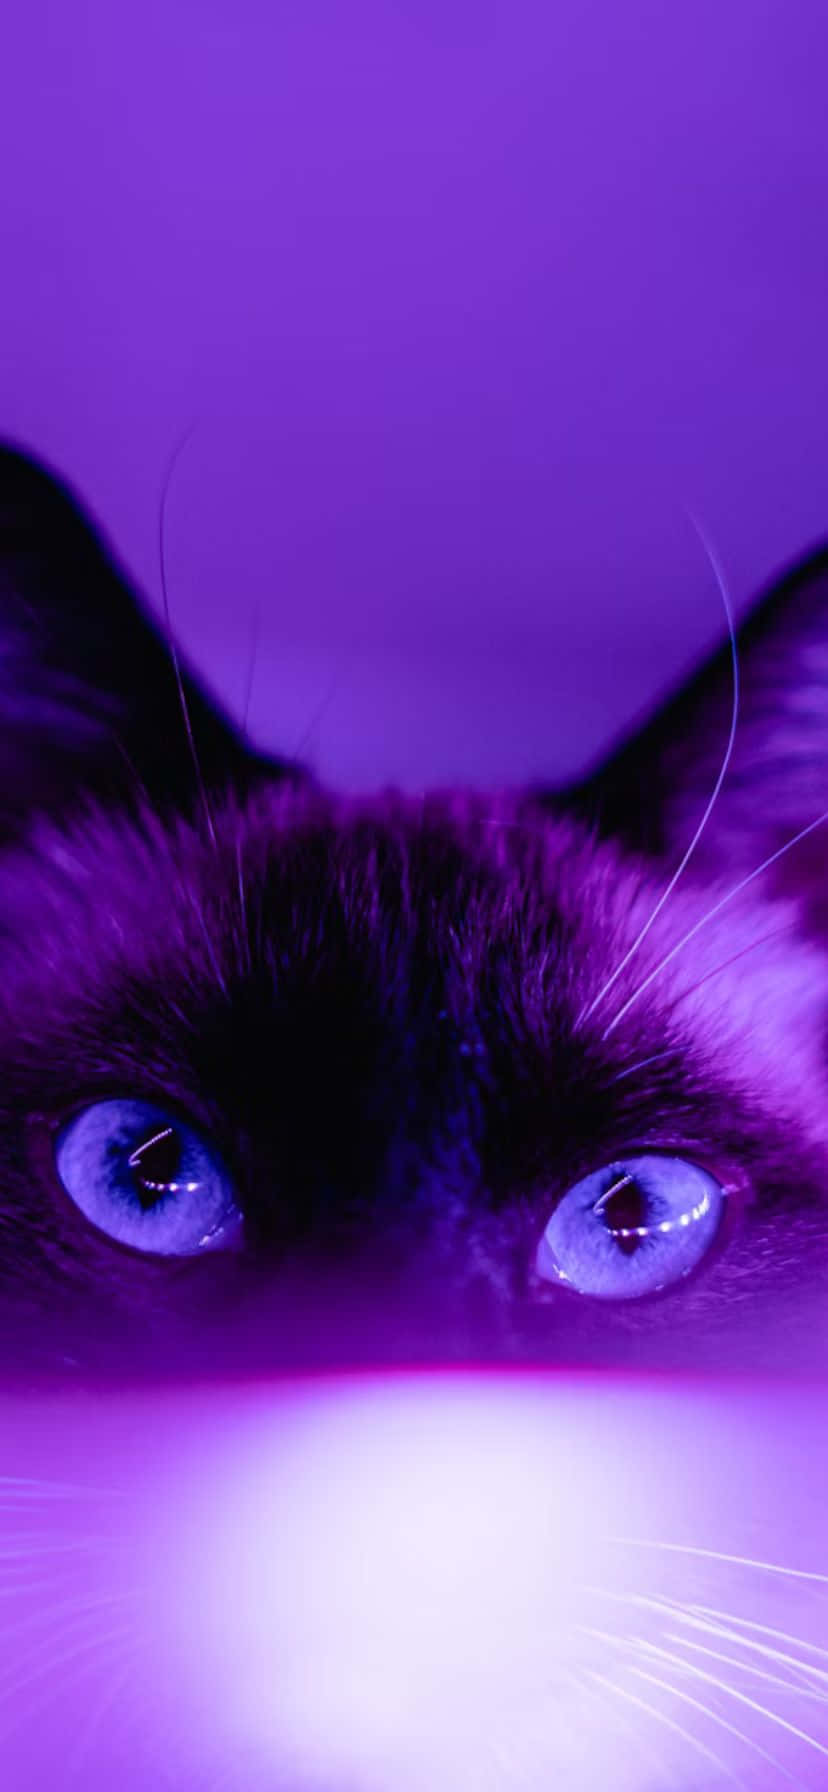 Mysterious Purple Cat Gaze Wallpaper